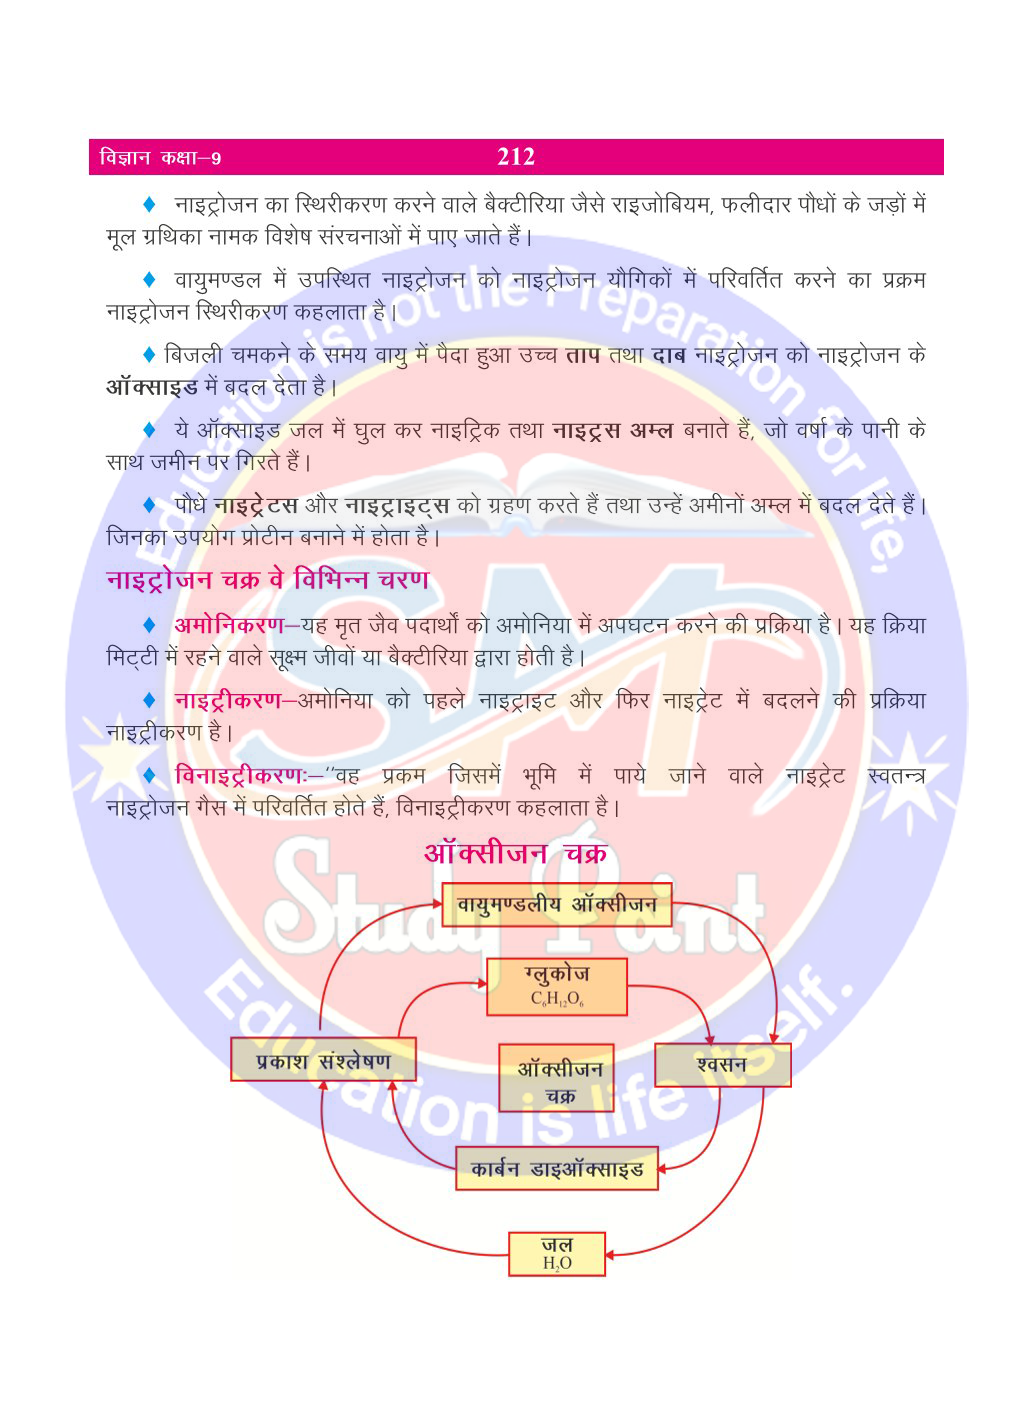 Bihar Board Class 9th Biology  Natural Wealth  Class 9 Biology Rivision Notes PDF  प्राकृतिक संपदा  बिहार बोर्ड क्लास 9वीं जीवविज्ञान नोट्स  कक्षा 9 जीवविज्ञान हिंदी में नोट्स